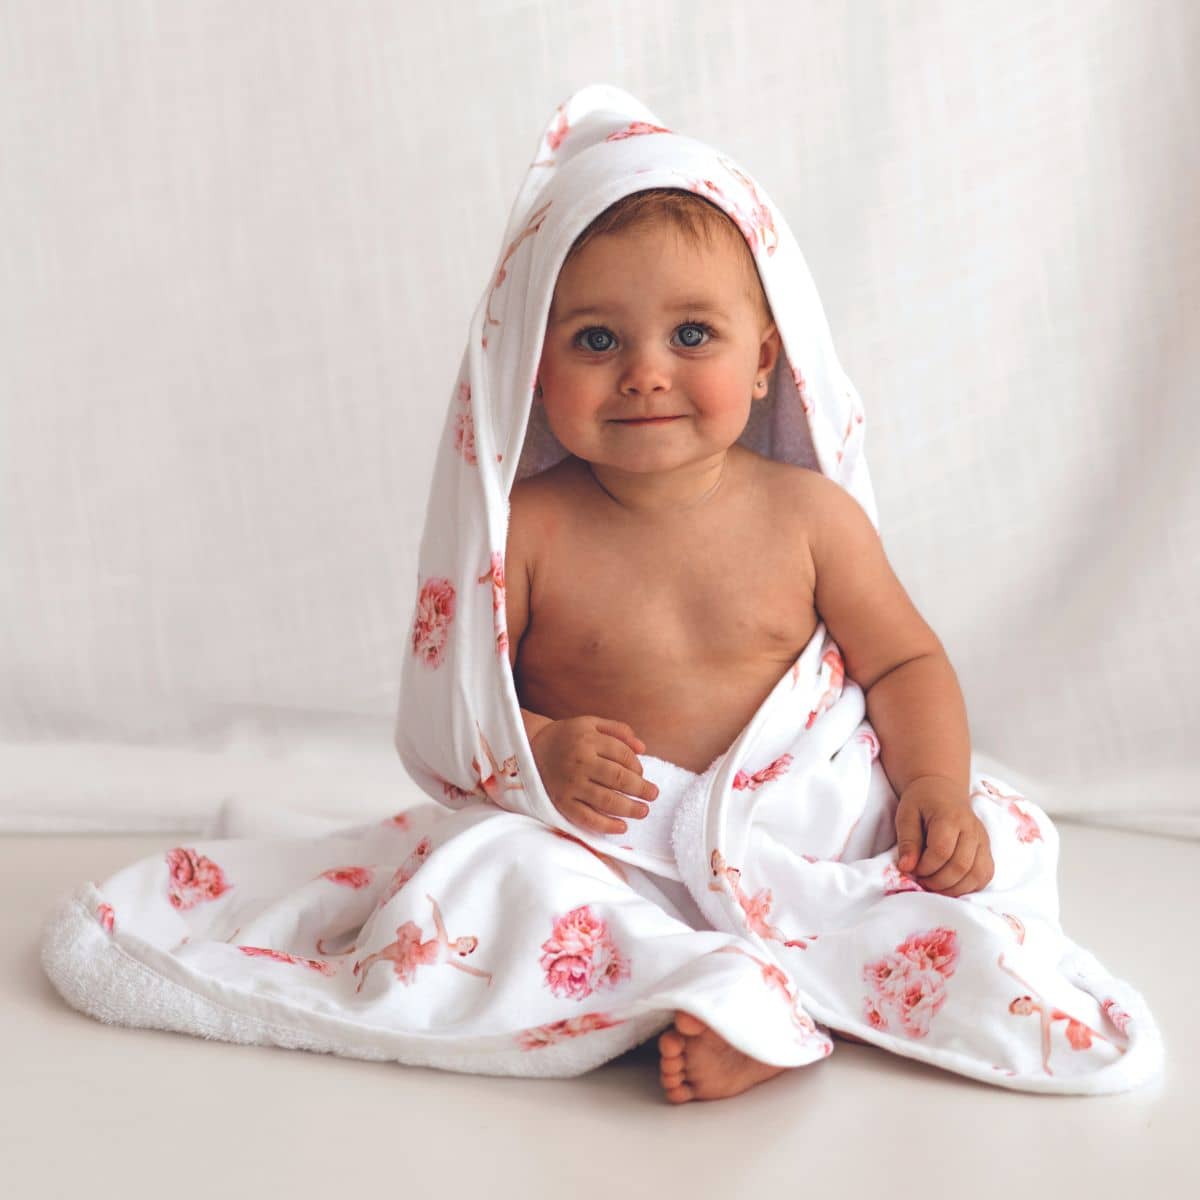 Snuggle Hunny Organic Hooded Baby Towel - Ballerina